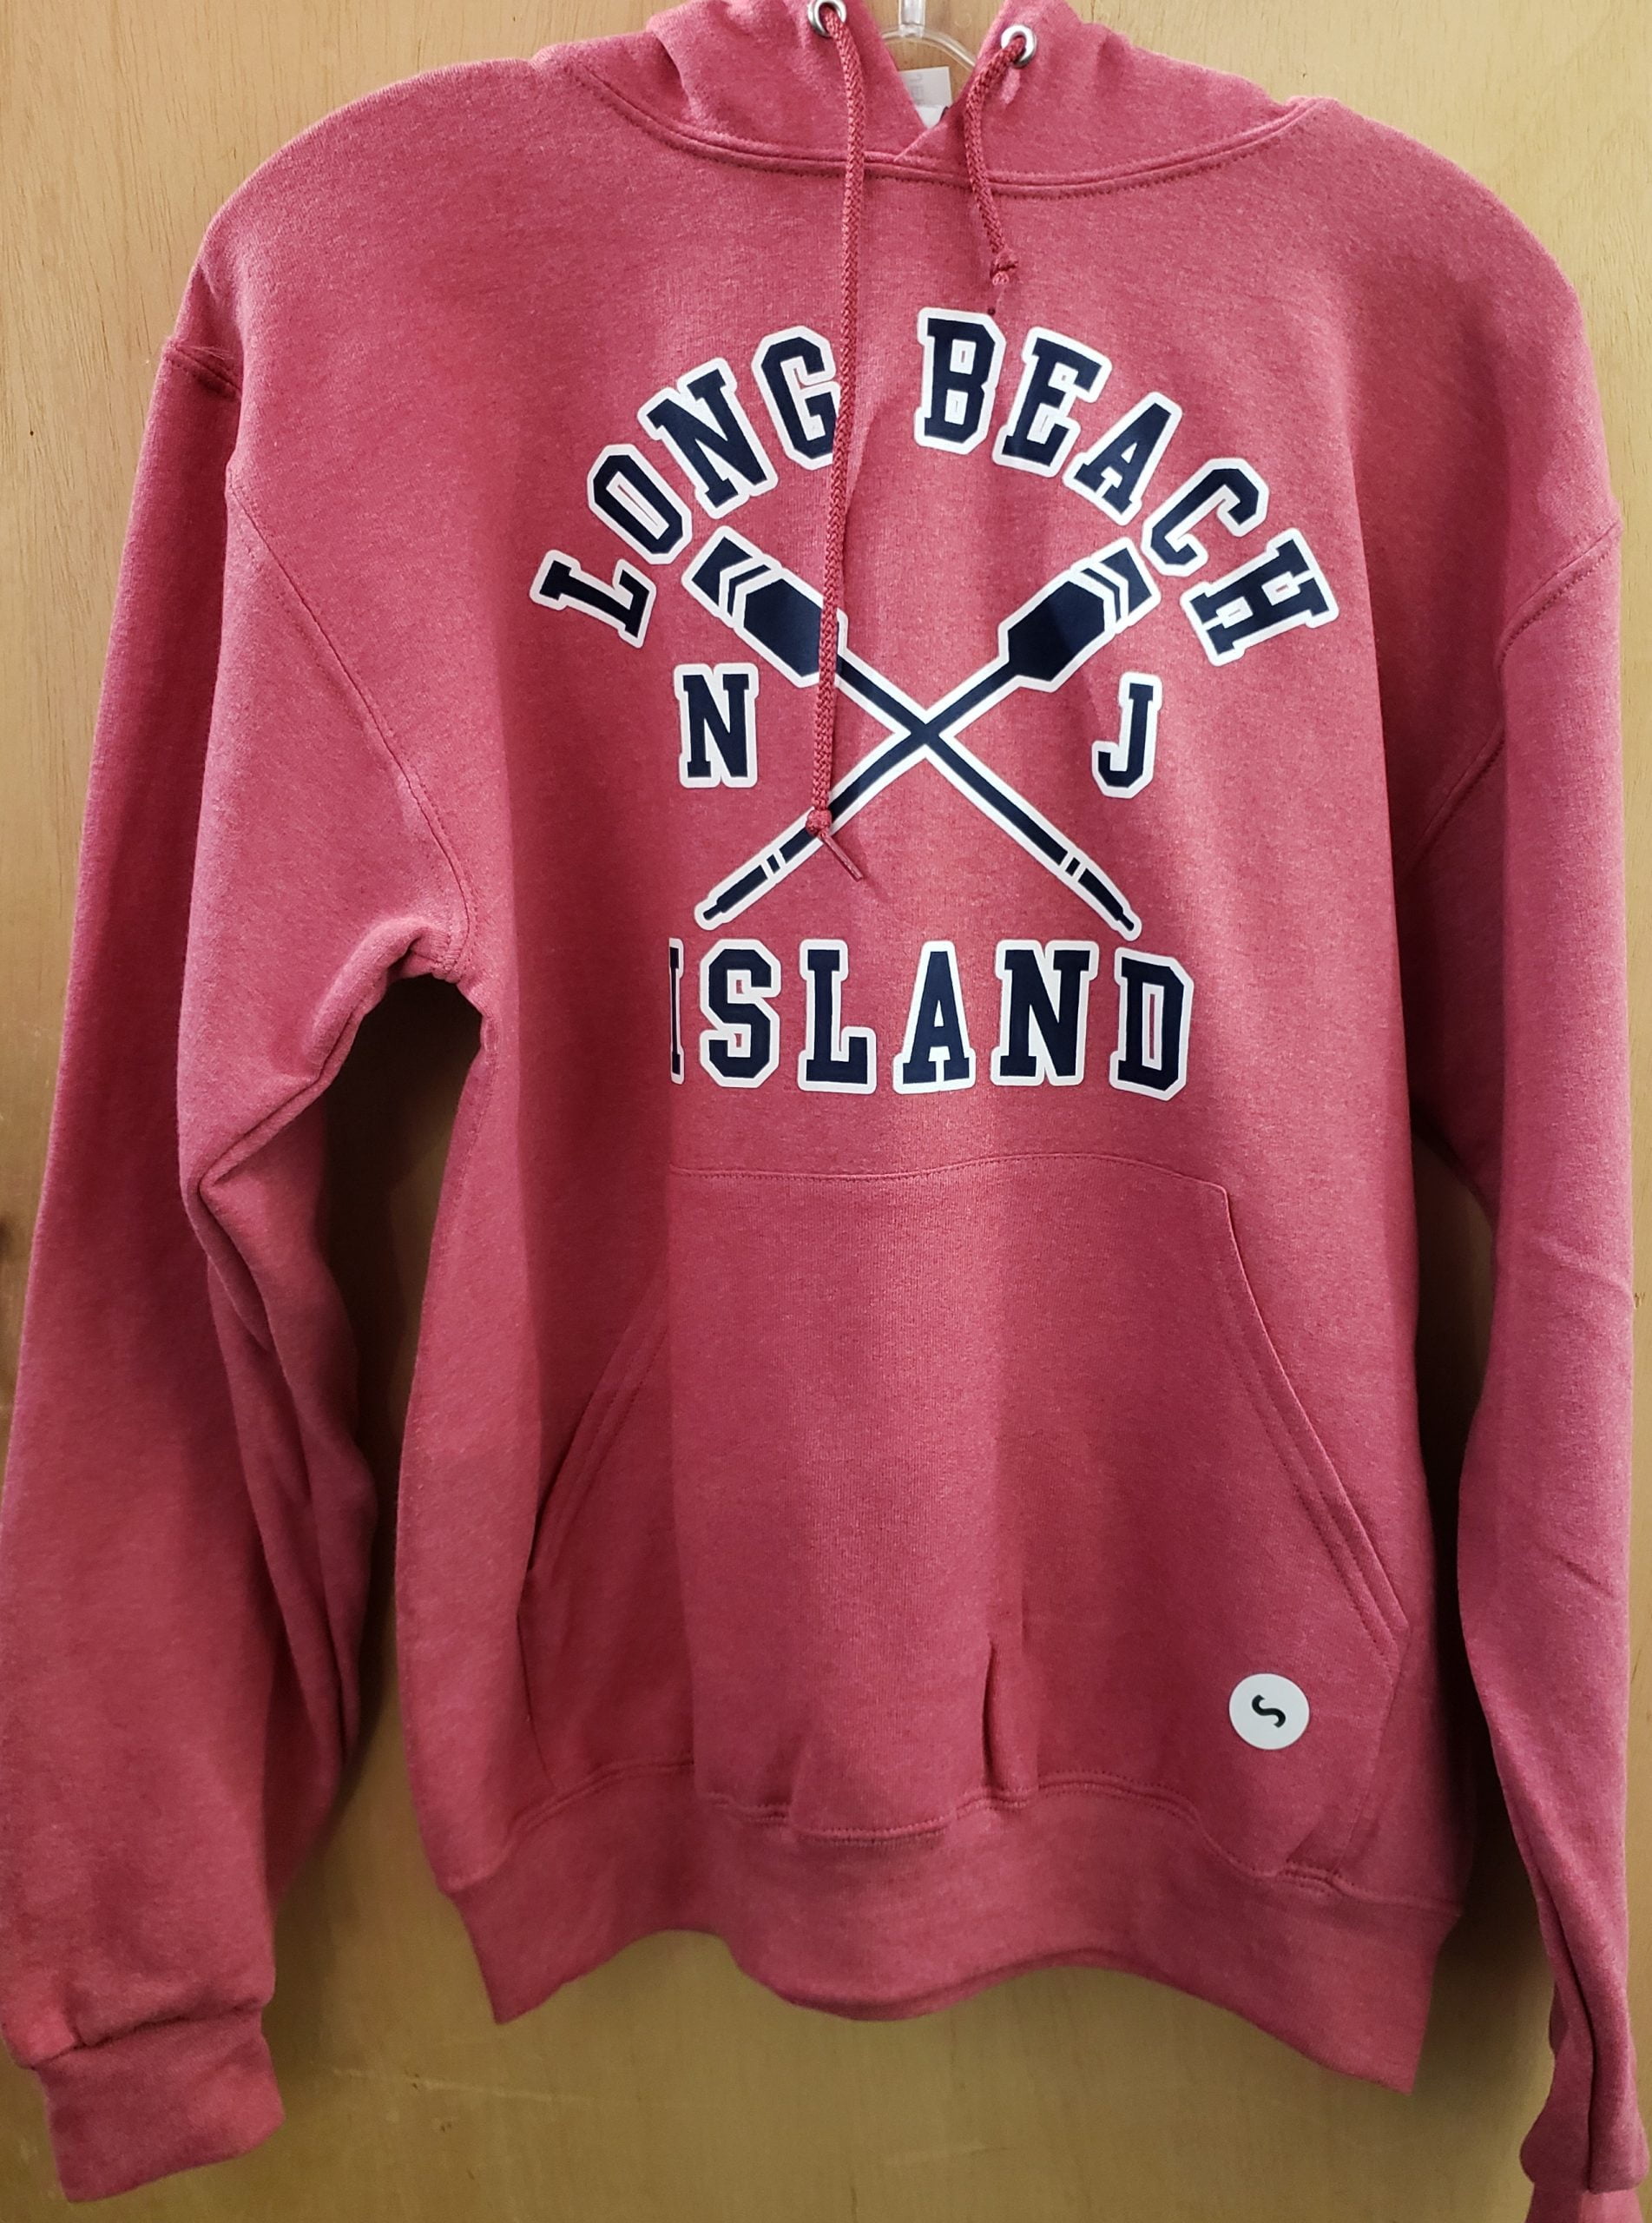 B-Lot Bruddah's Oak LV LA shirt, hoodie, sweater, long sleeve and